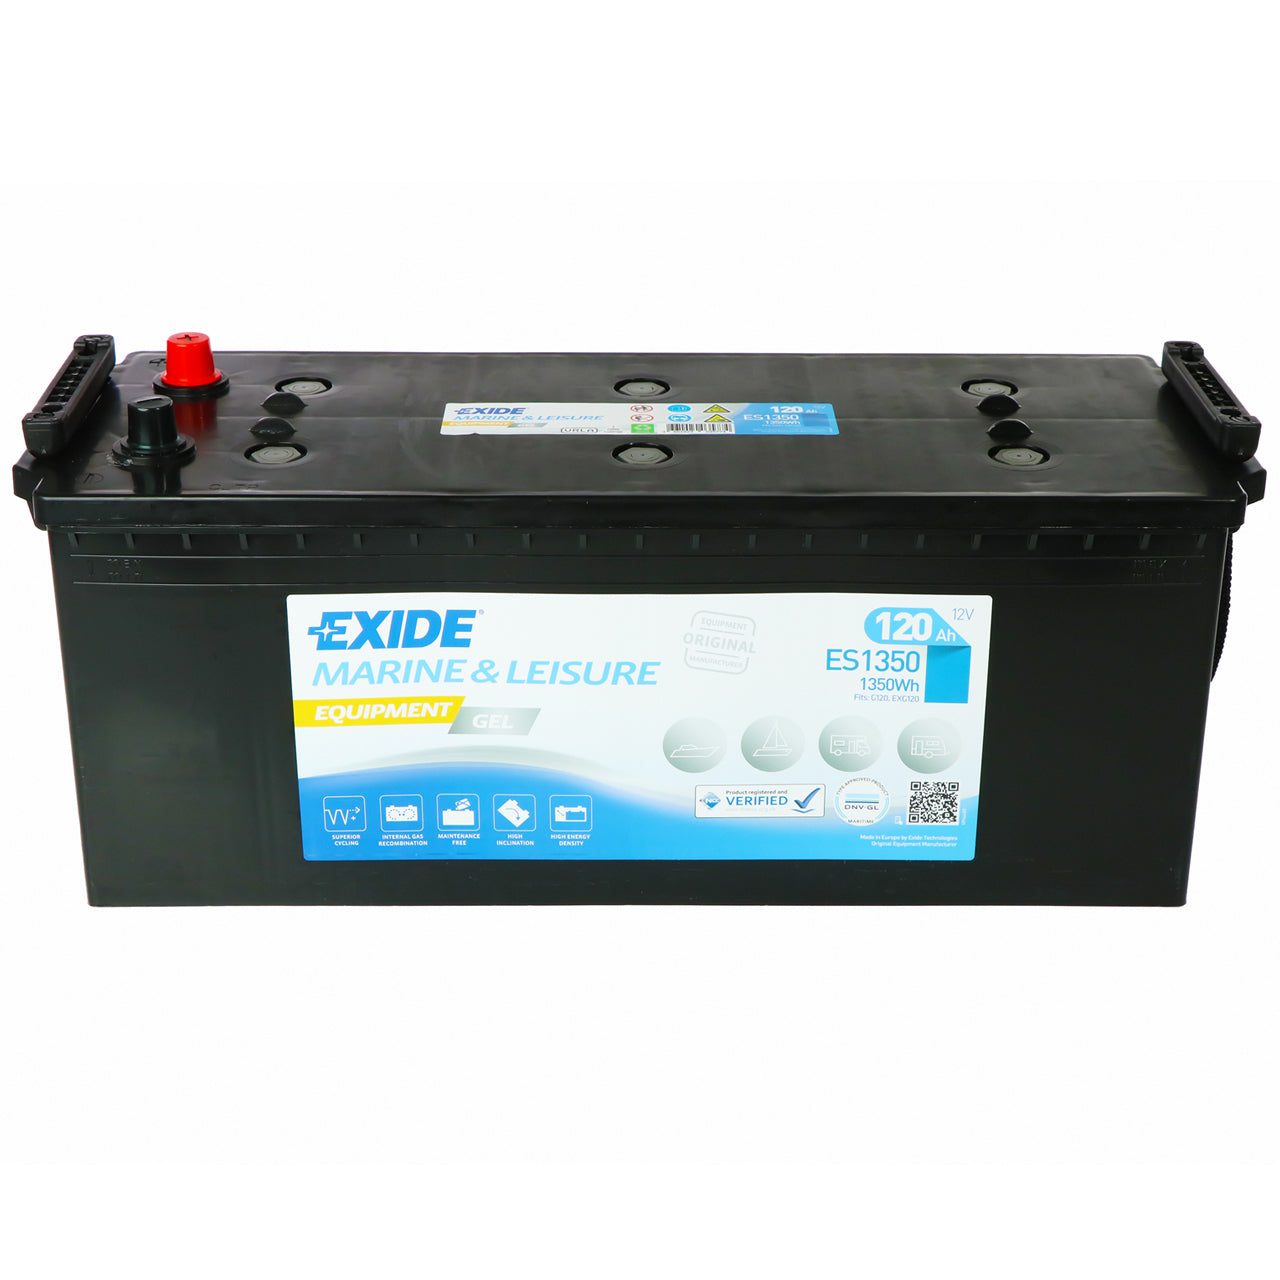 EXIDE EQ600 Batterie 12V 70Ah 760A B13 Batterie AGM EQ600